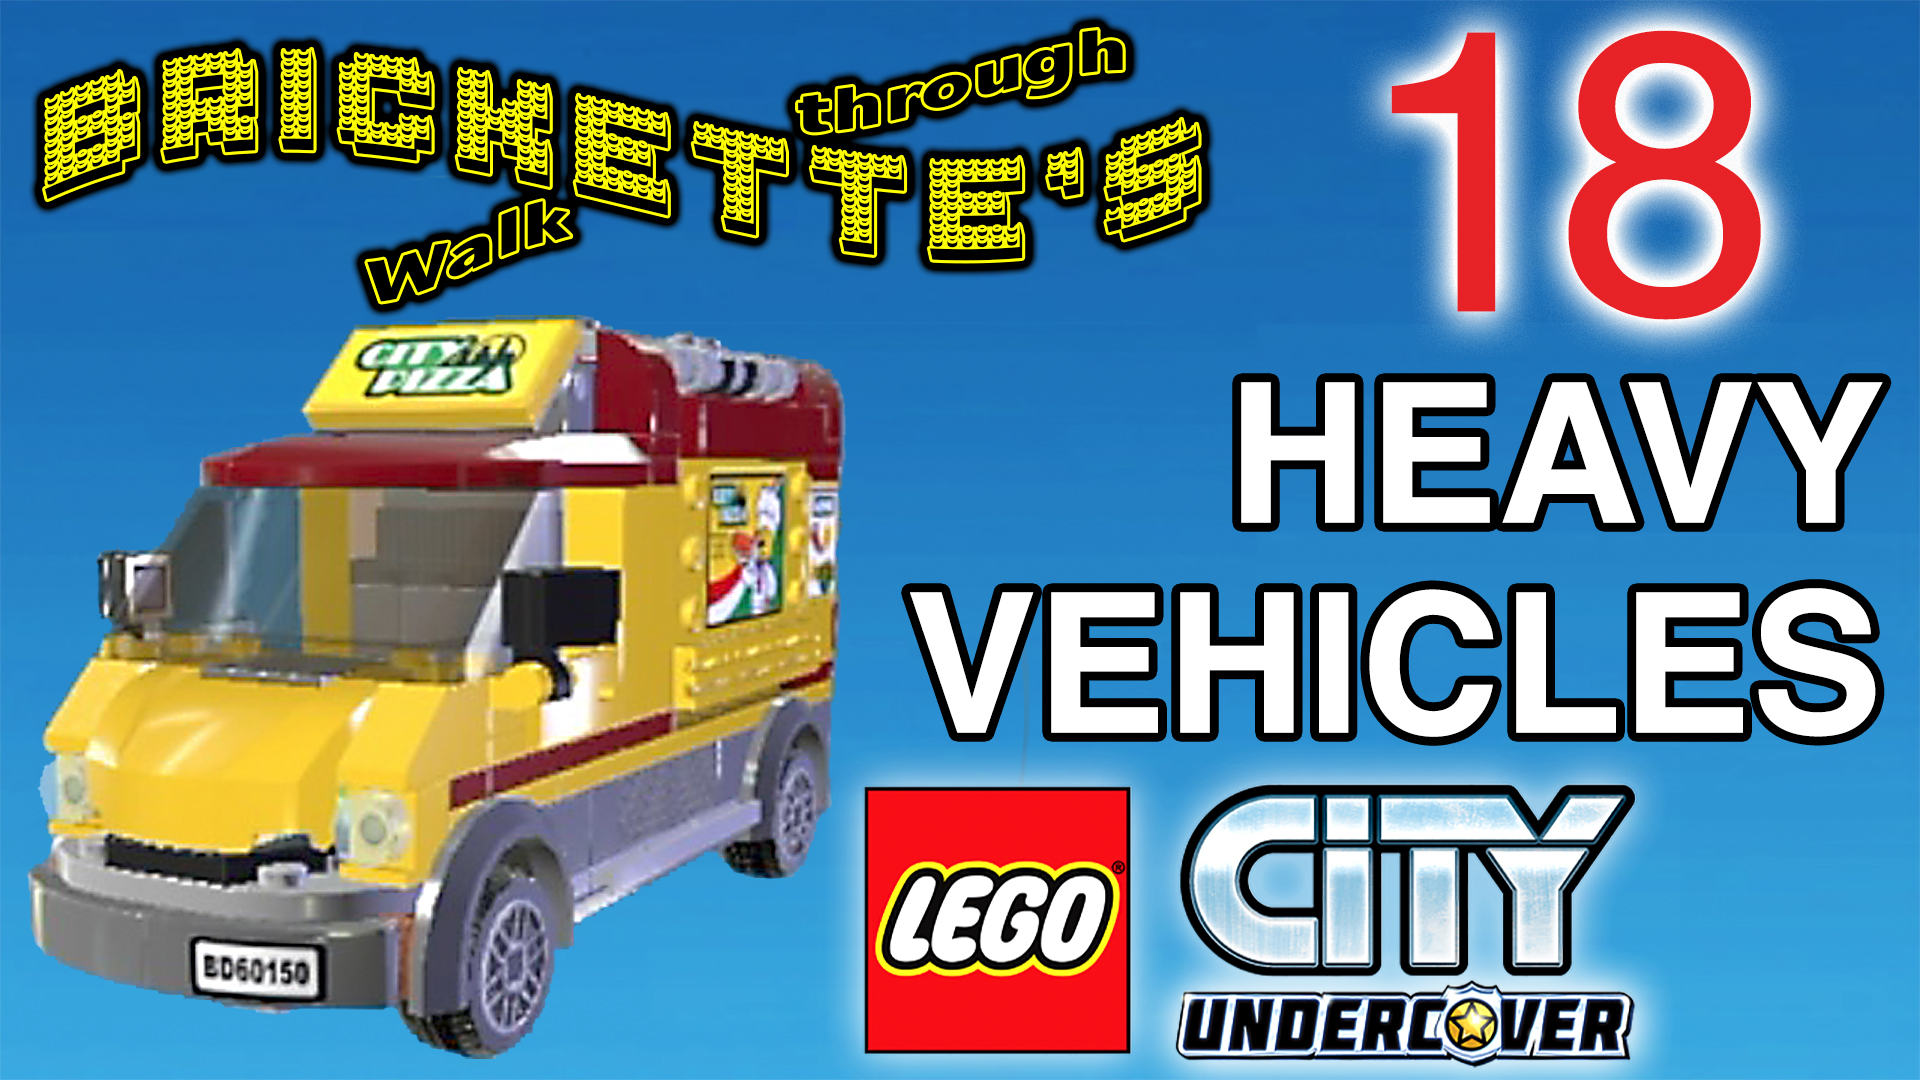 lego city undercover vehicles